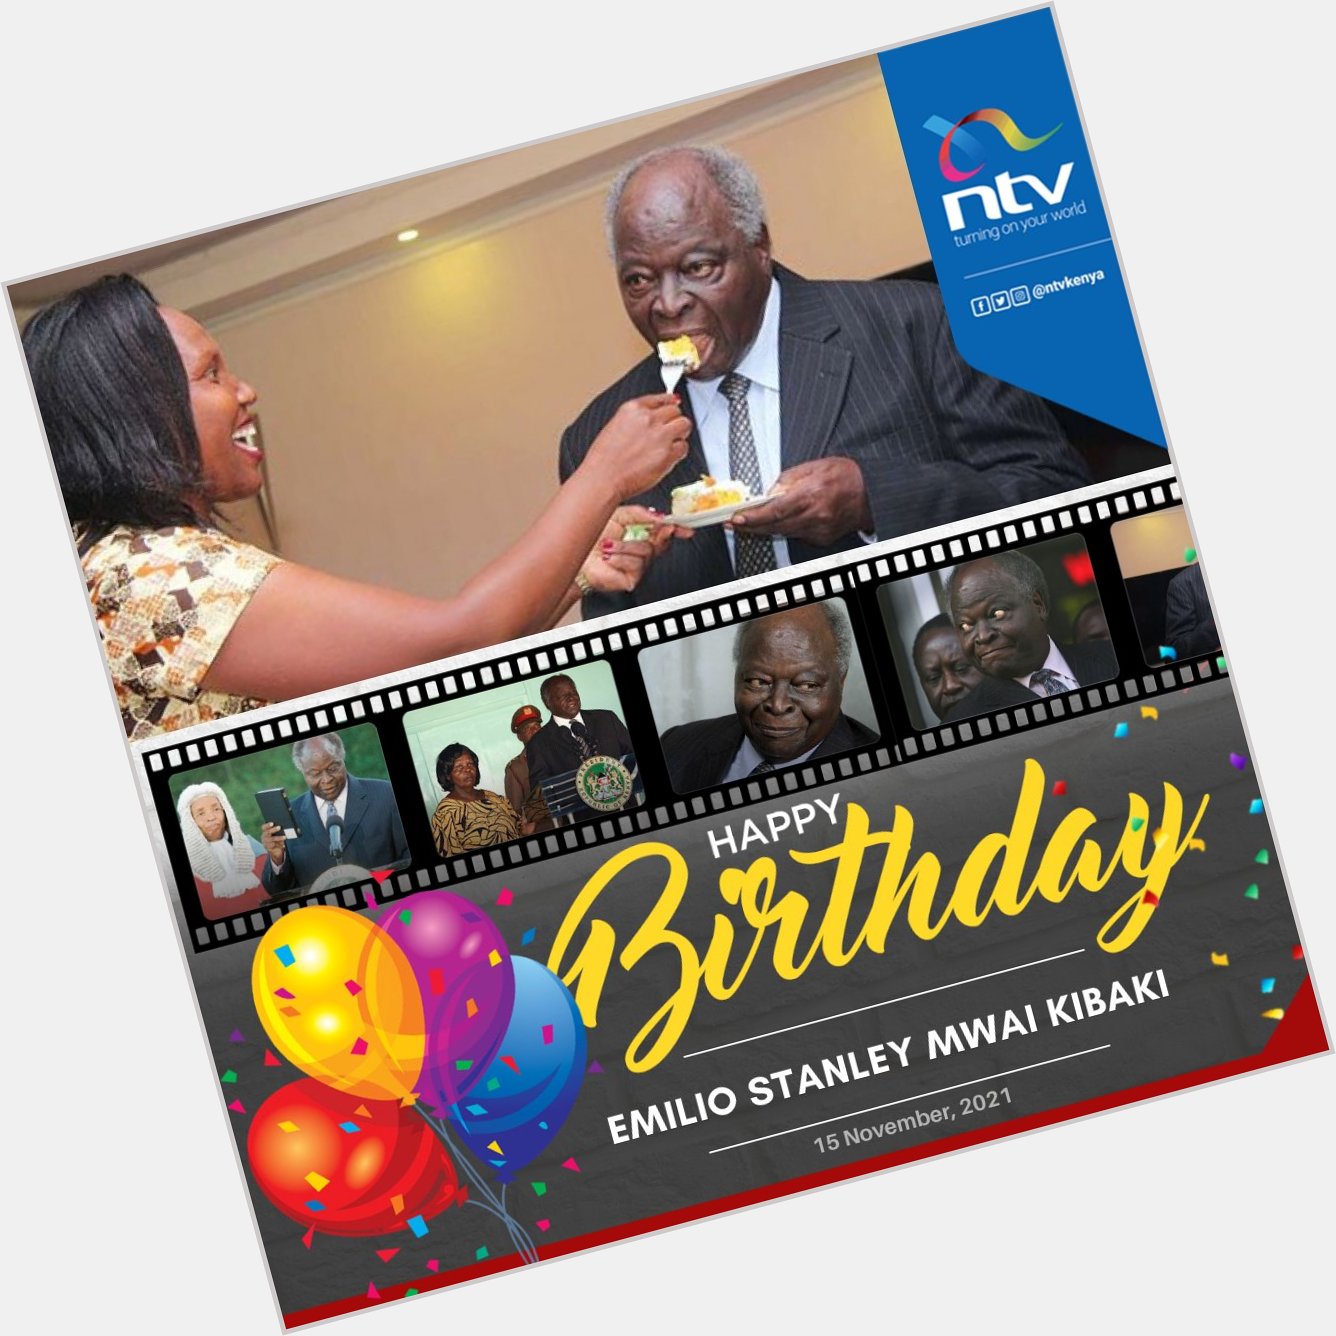 Help us wish Former President Mwai Kibaki a happy birthday as he marks his 90th birthday. 